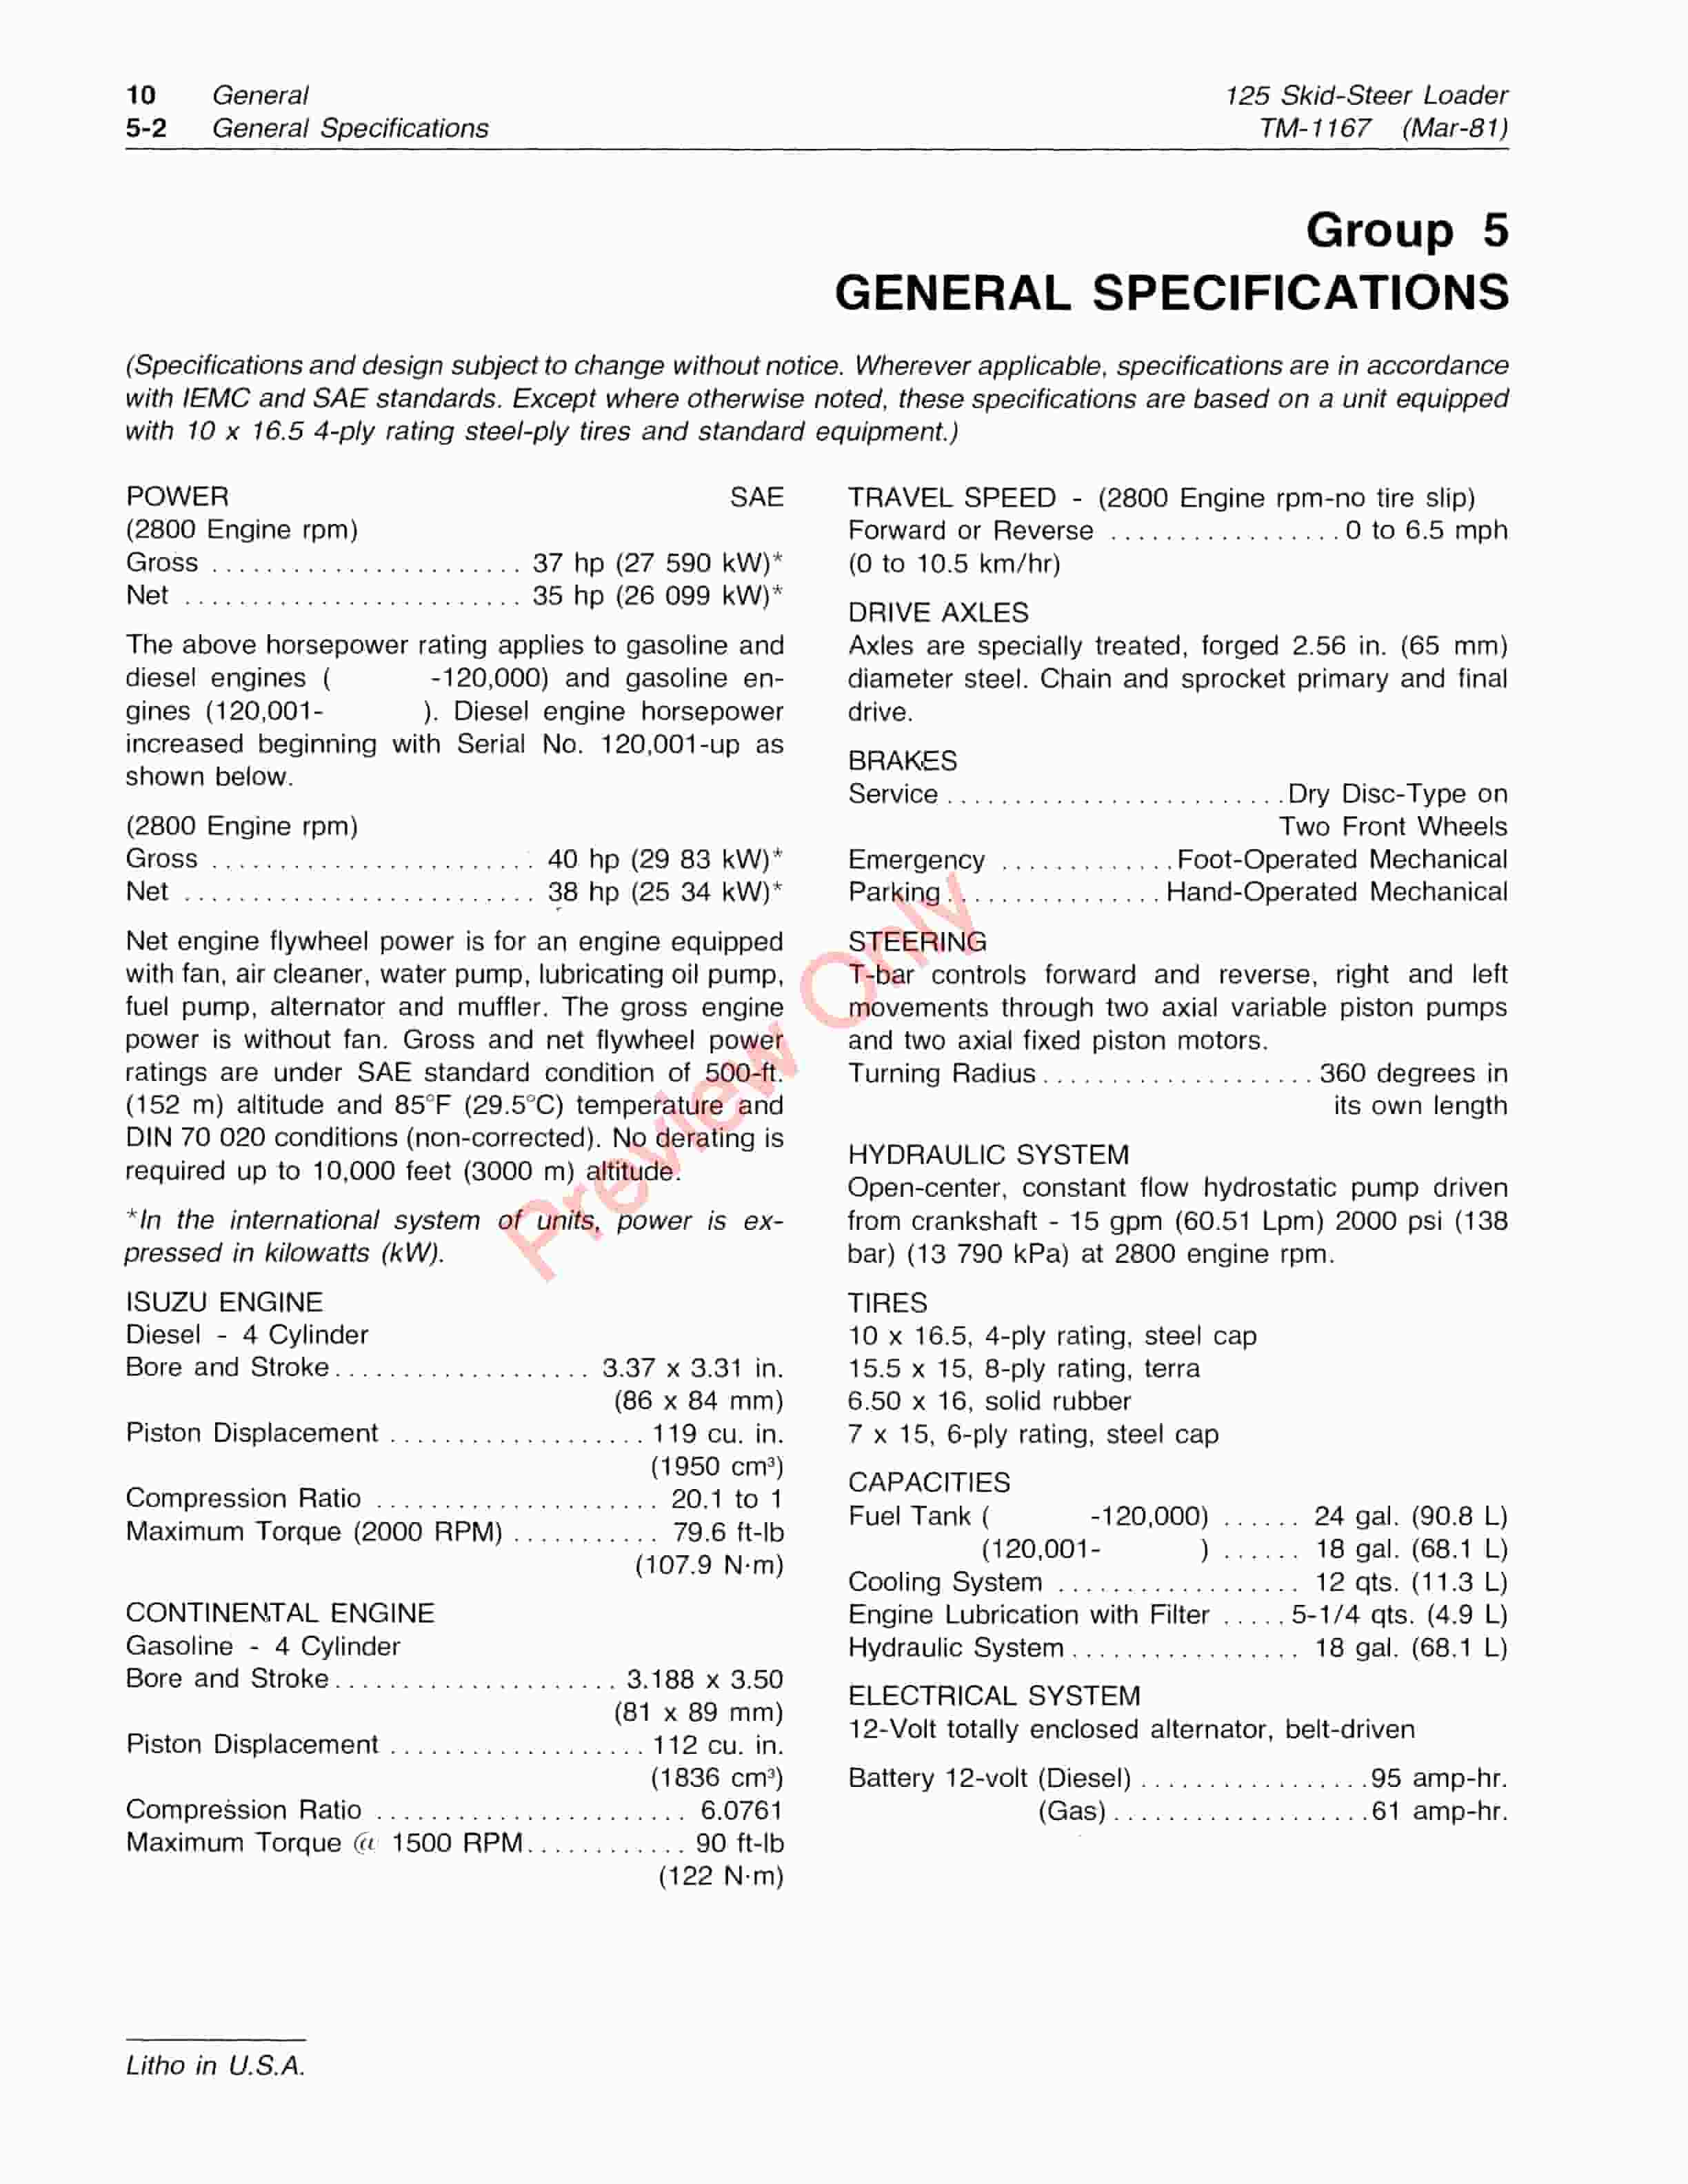 John Deere 125 Skid Steer Loader Technical Manual TM1167 01MAR81 4